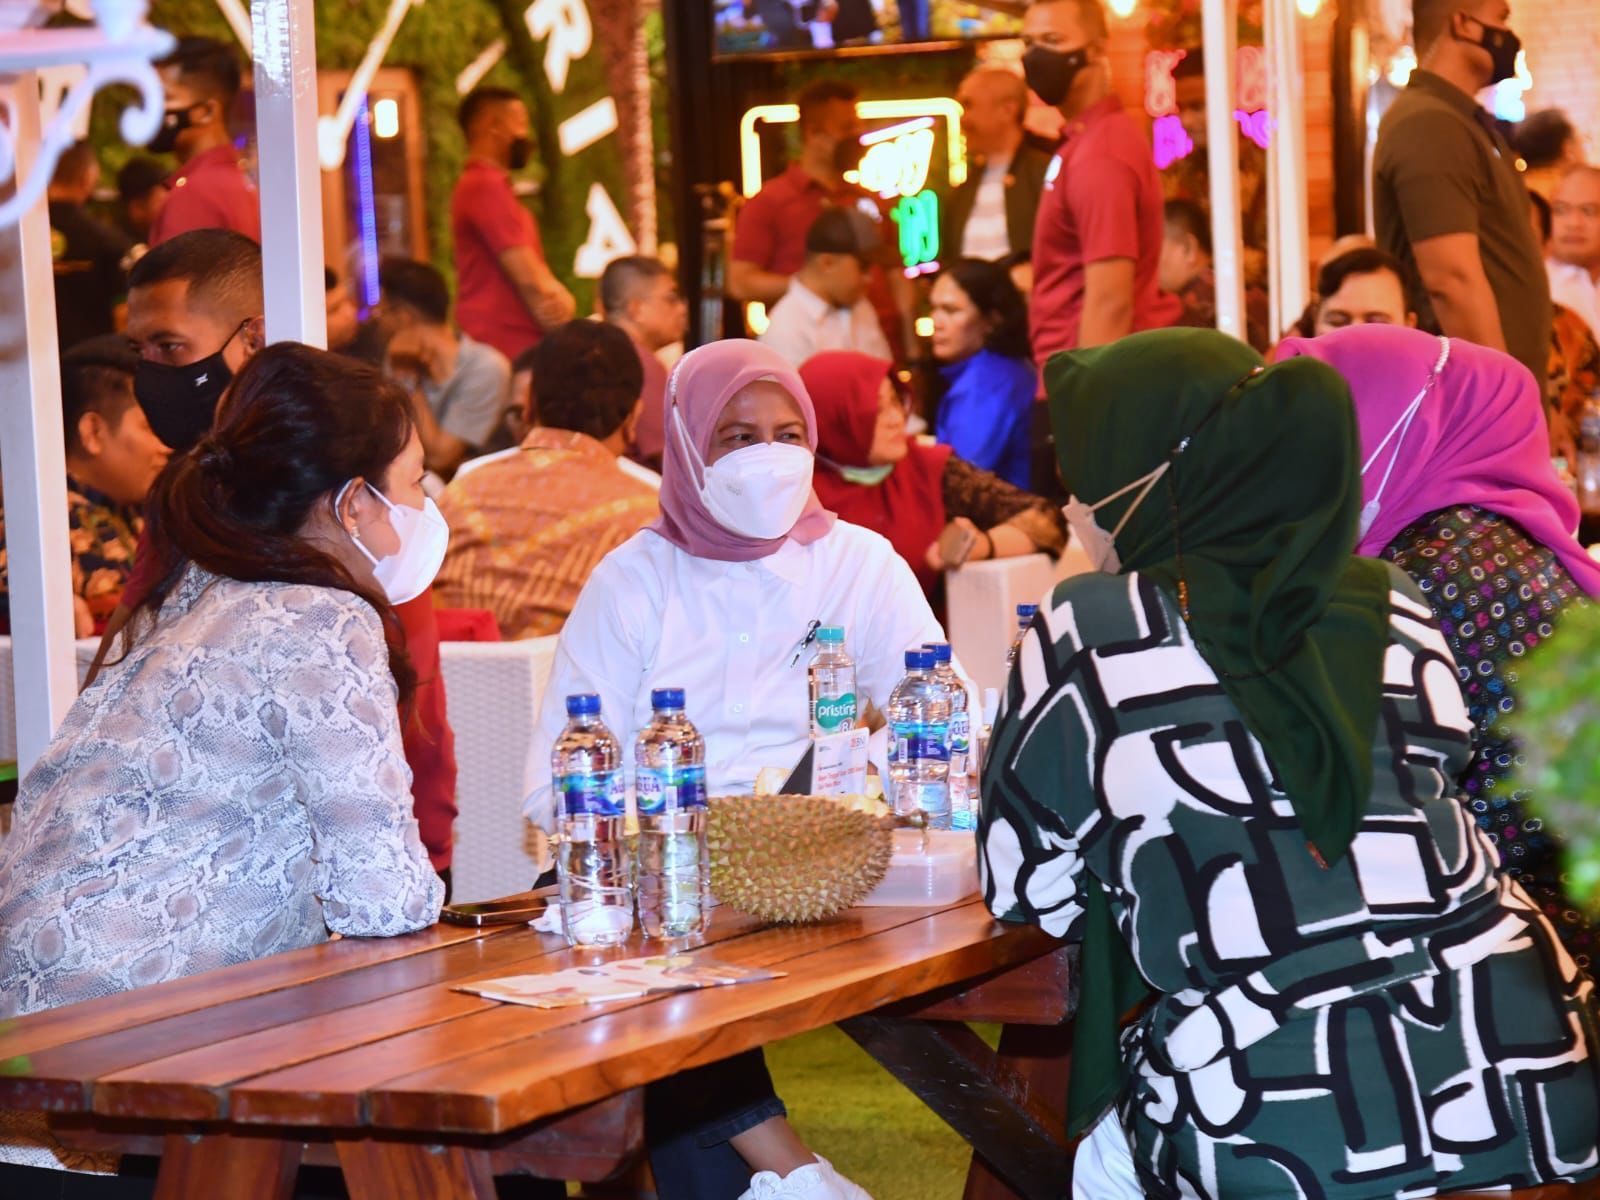 Suasana malam yang hangat menemani Presiden Joko Widodo dan Ibu Iriana Joko Widodo menikmati durian bersama sejumlah pemimpin redaksi (pemred) media nasional dan media lokal Sumatra Utara.